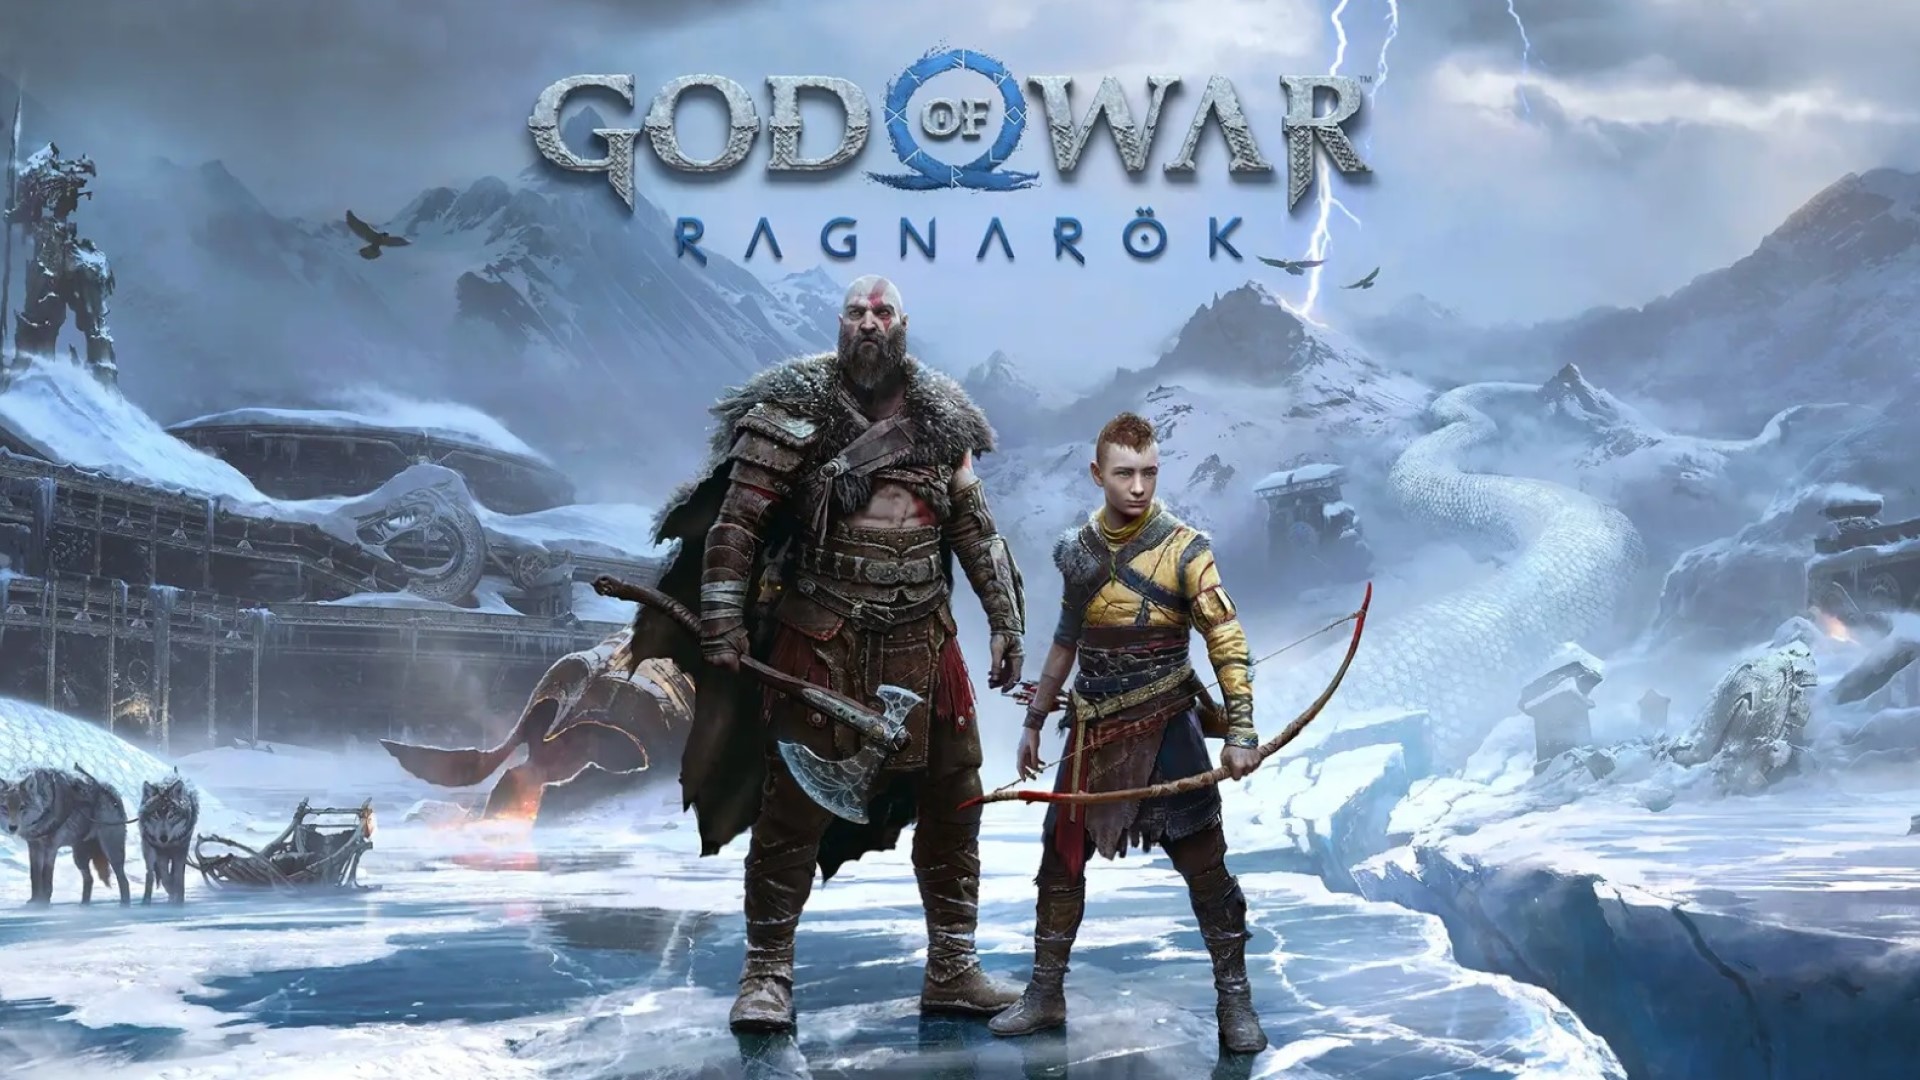 god of war ragnarök release date download free